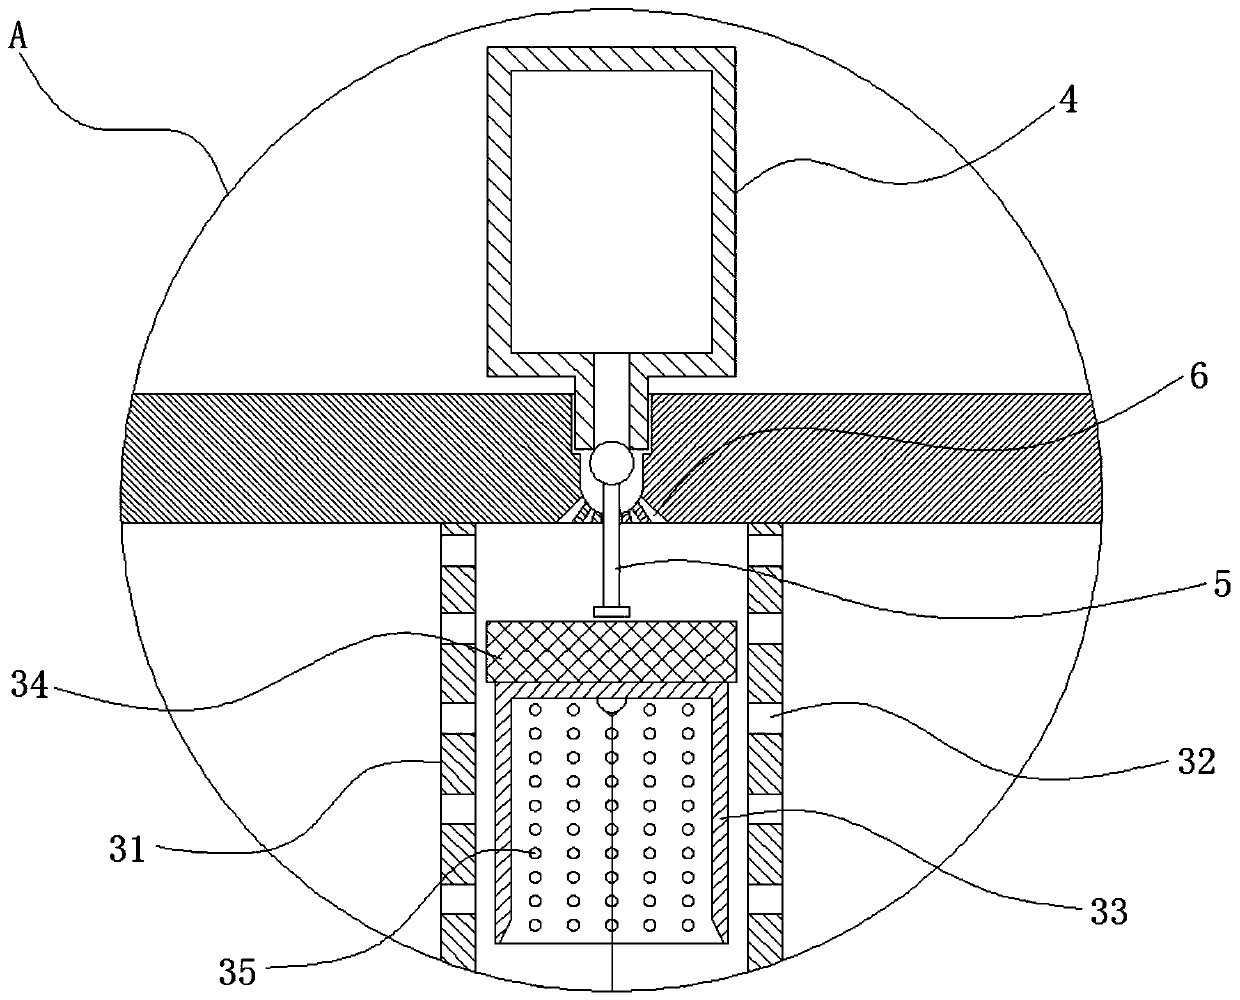 Centrifugal force based rotary sewage pre-treatment device